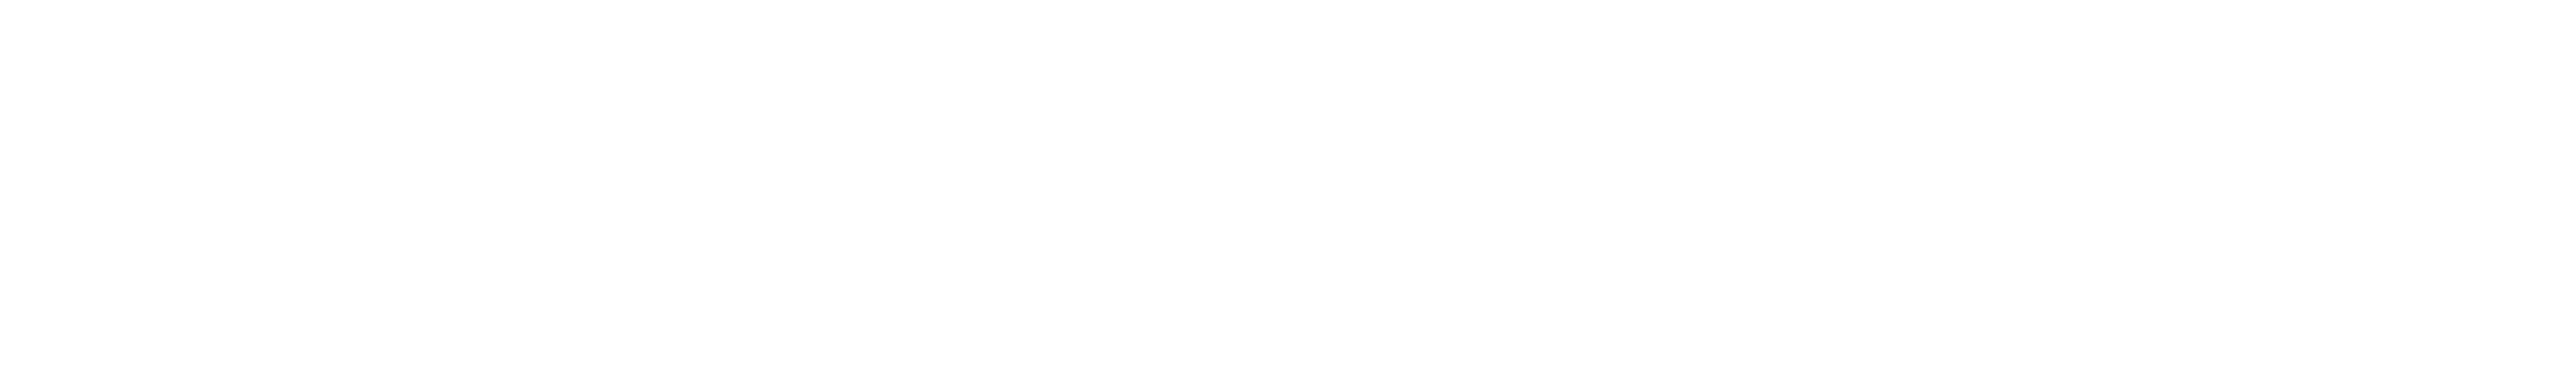 PPE: Philosophy, Politics, and Economics Site